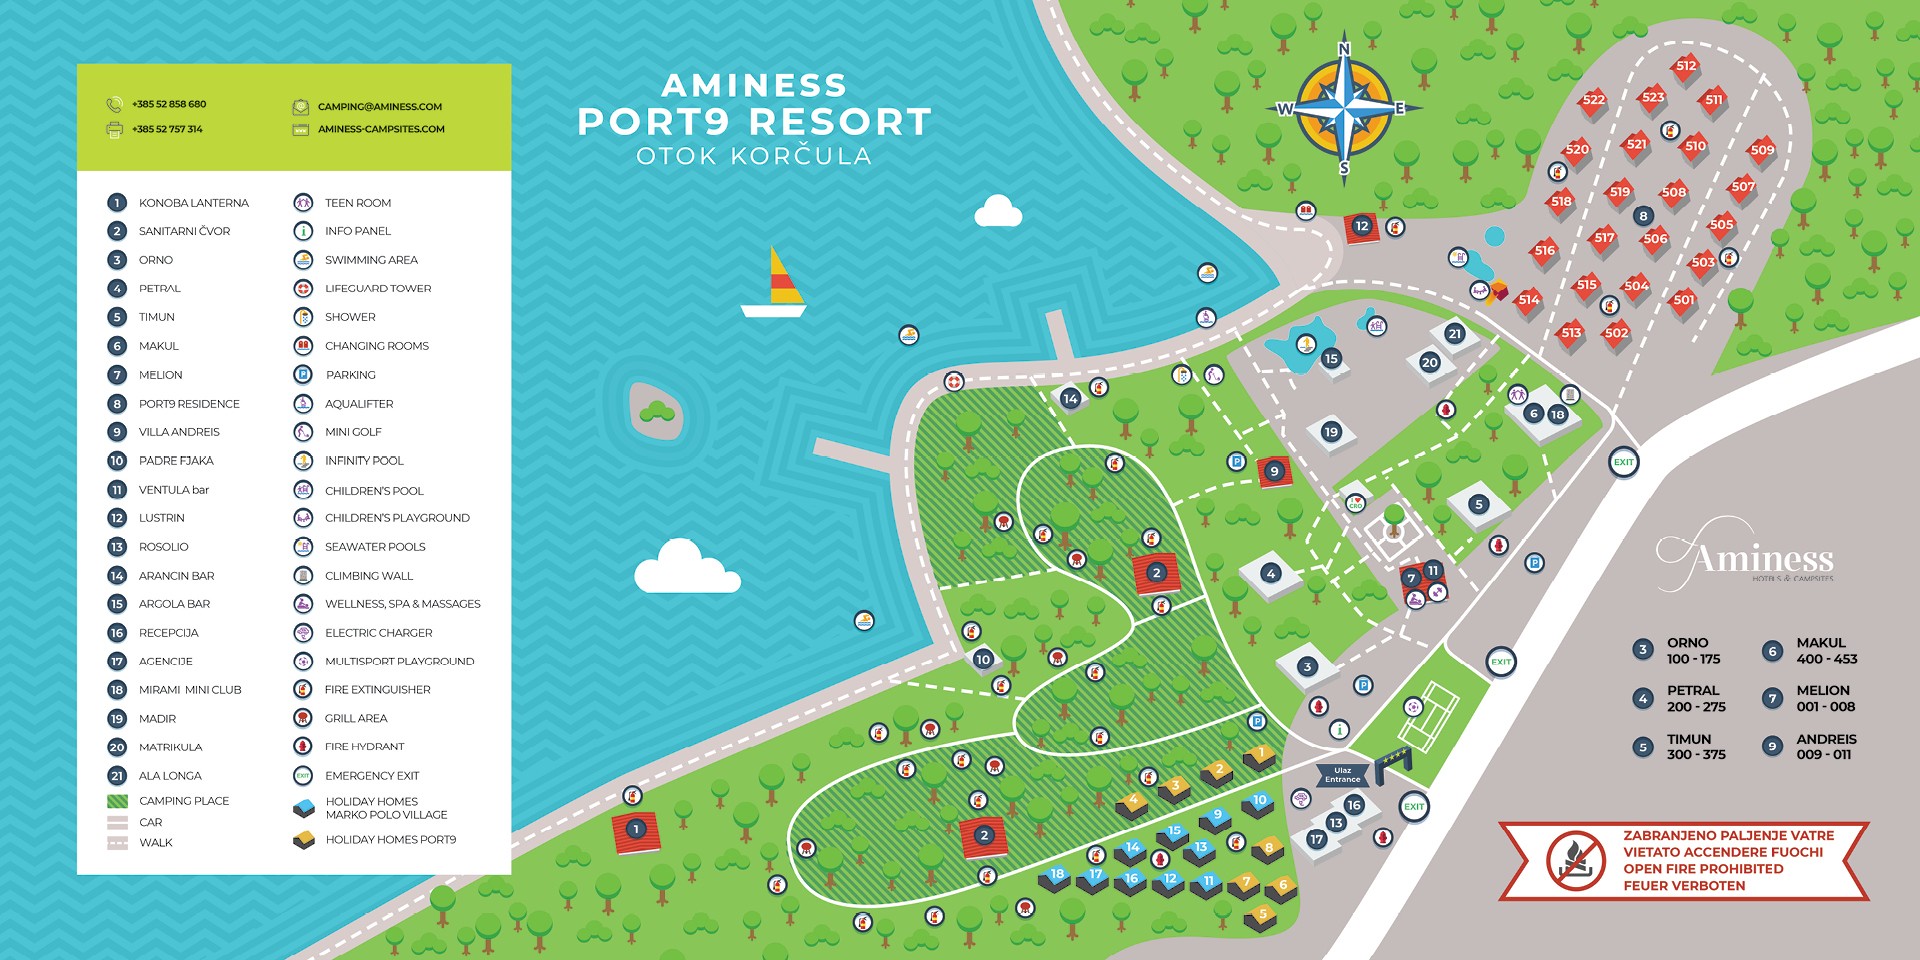 Aminess Port9 Resort